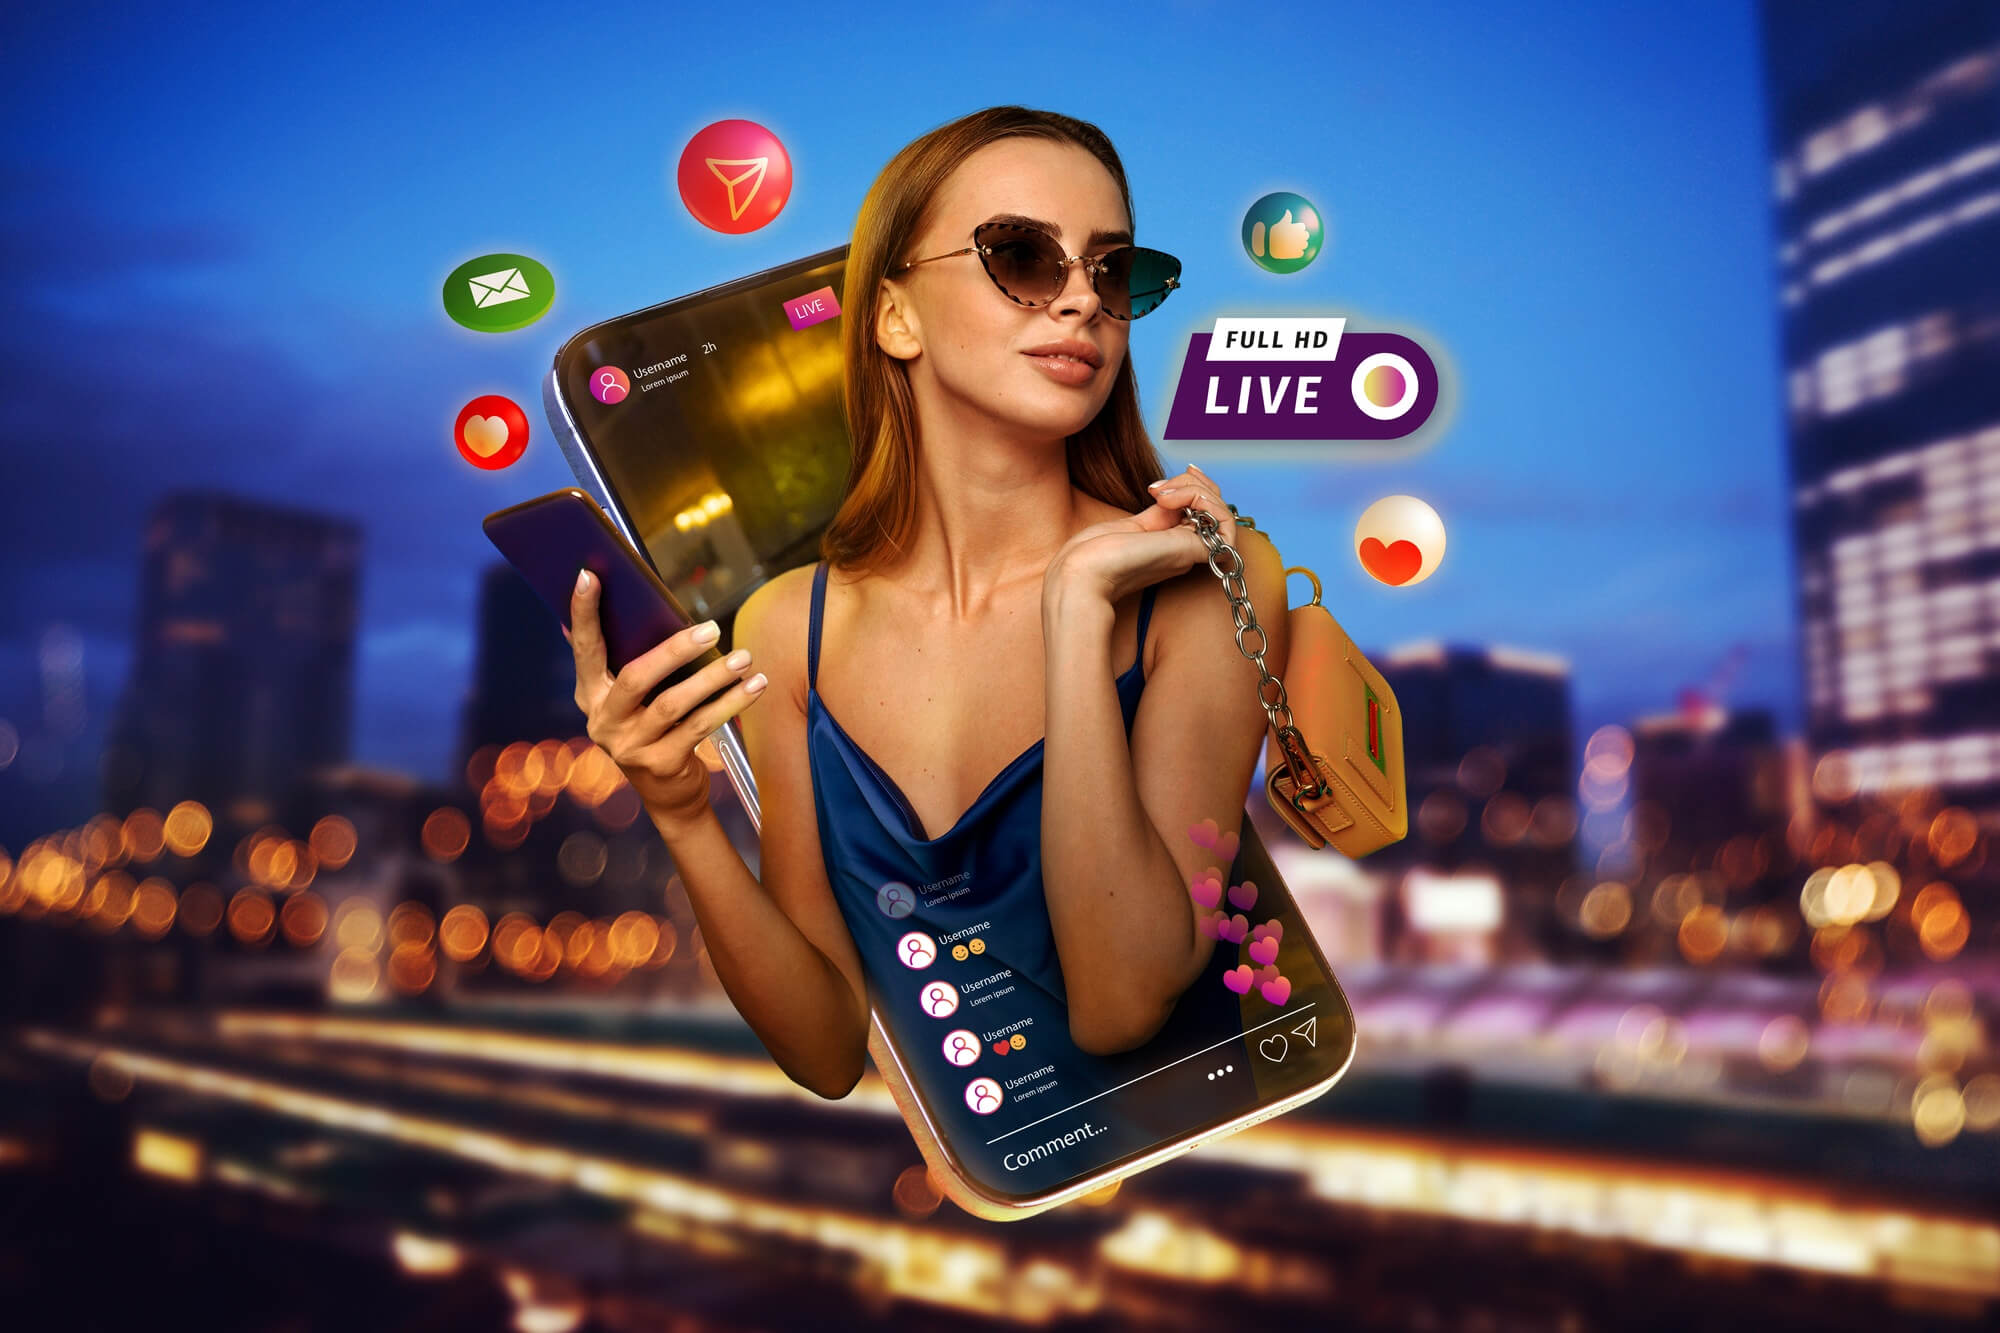 Grandpashabet Casino: Mobil Uygulama ile Her Yerde Kazanma Fırsatı! 10 Tricks The Competition Knows, But You Don't